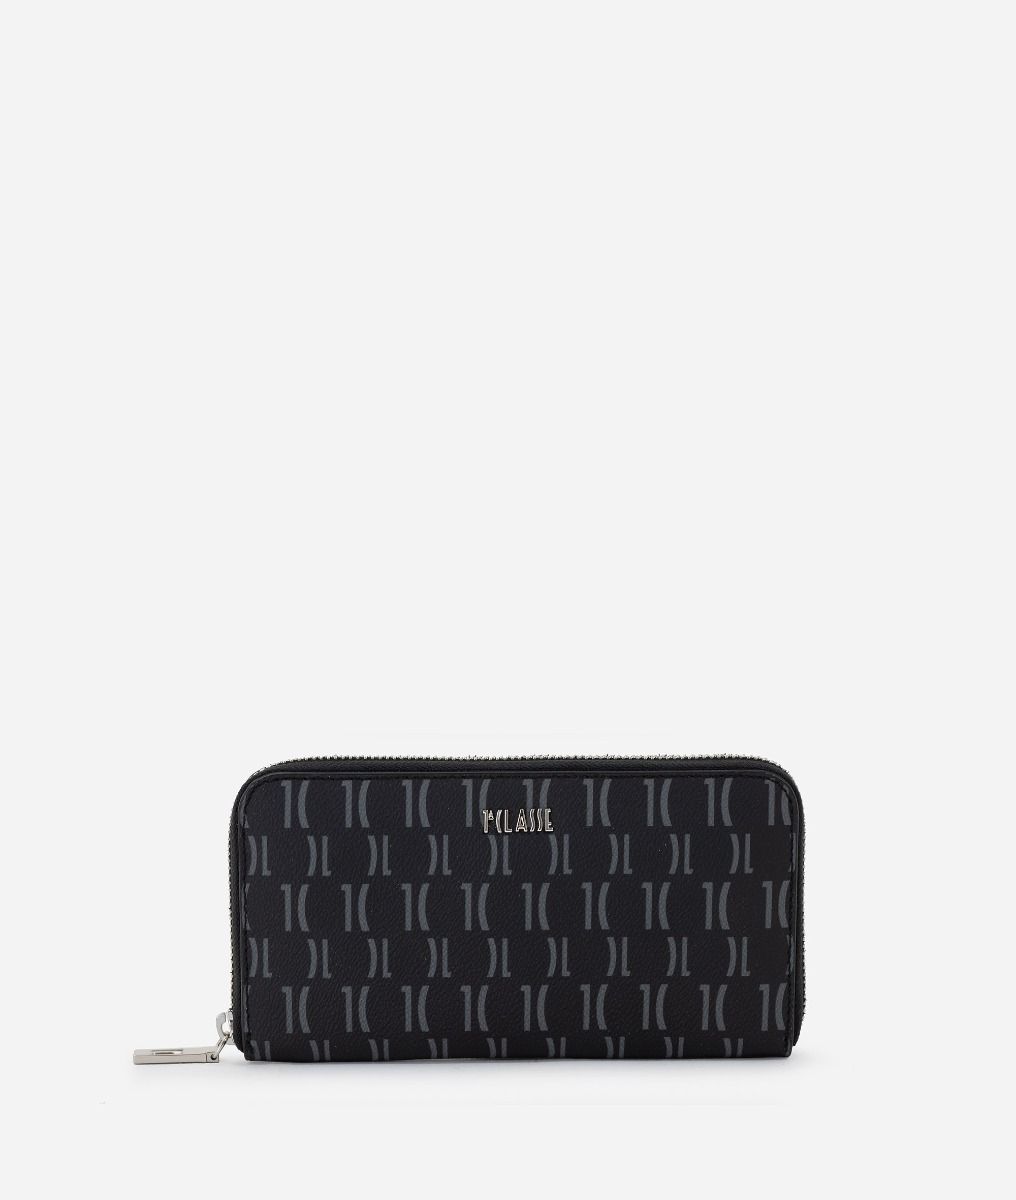 Monogram leather wallet Black,front